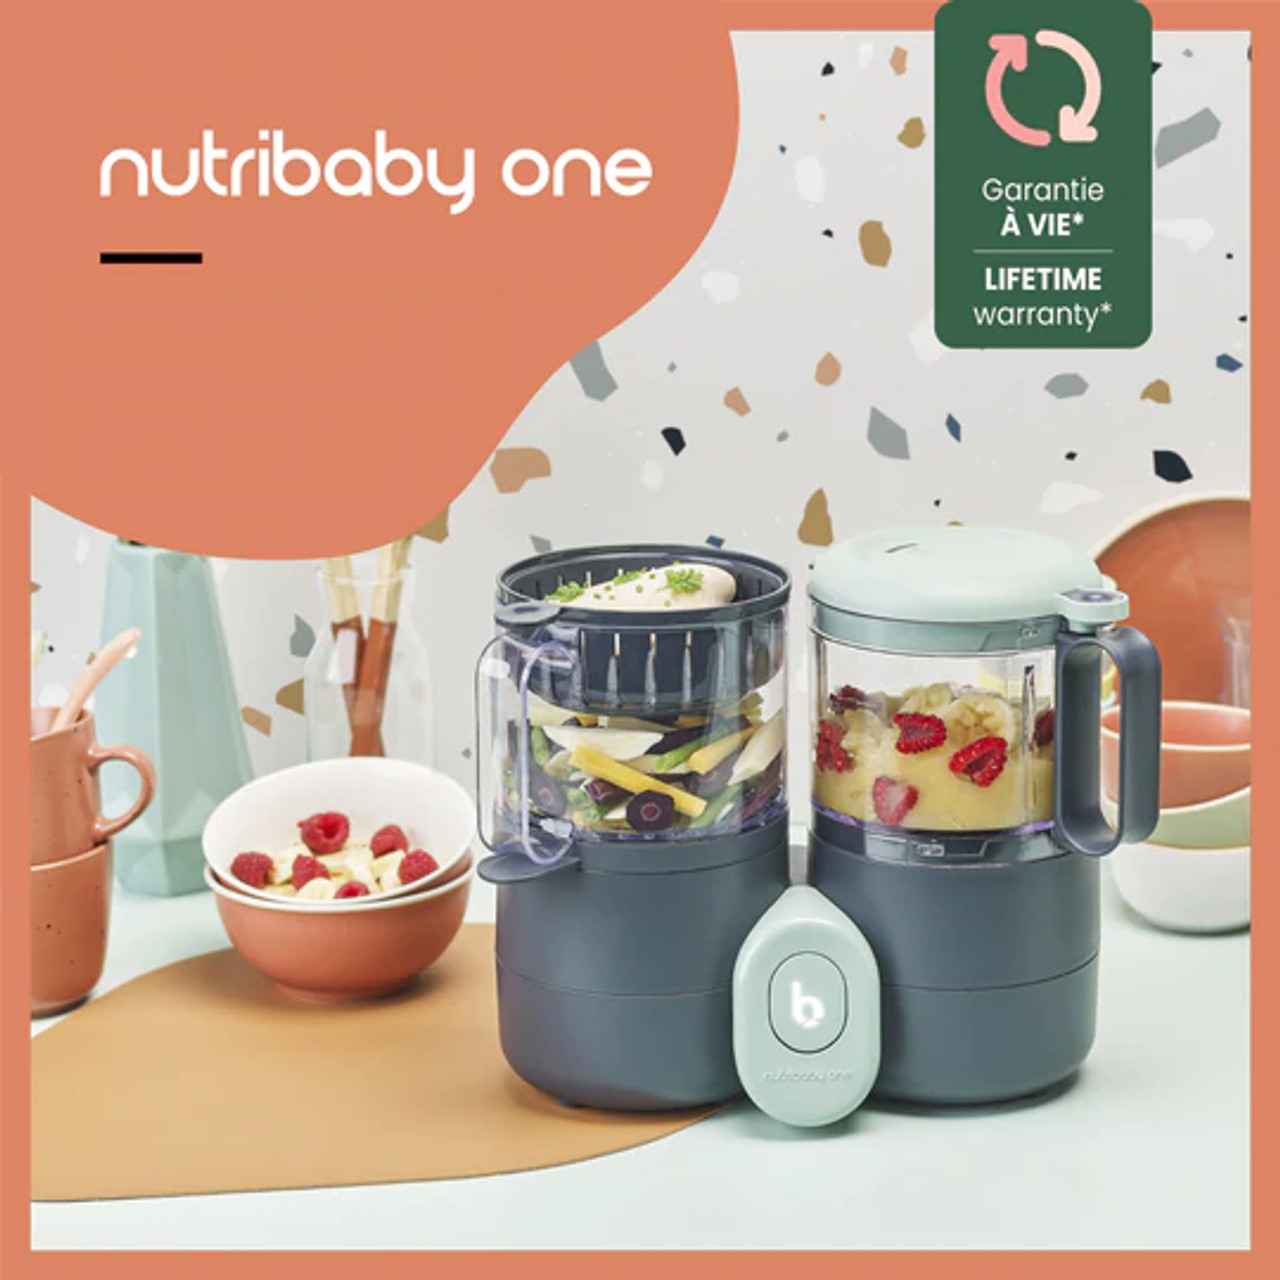 Babymoov Nutribaby One Baby Food Maker review - Bottles